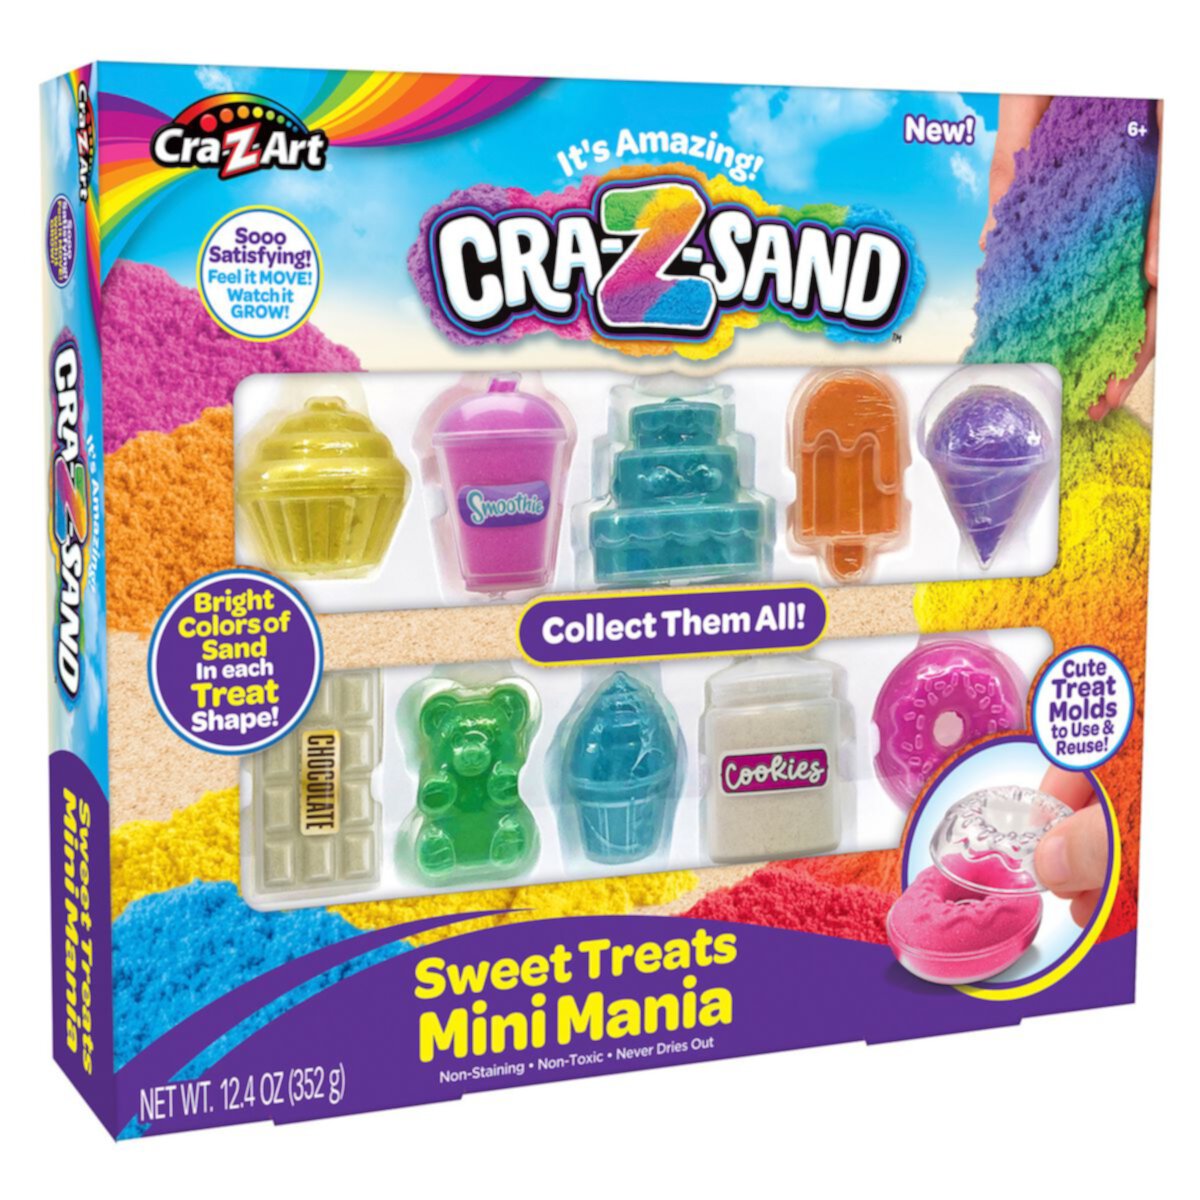 Cra-Z-Art Cra-Z-Sand Sweet Treats Mini Mania Toy Cra-Z-Art